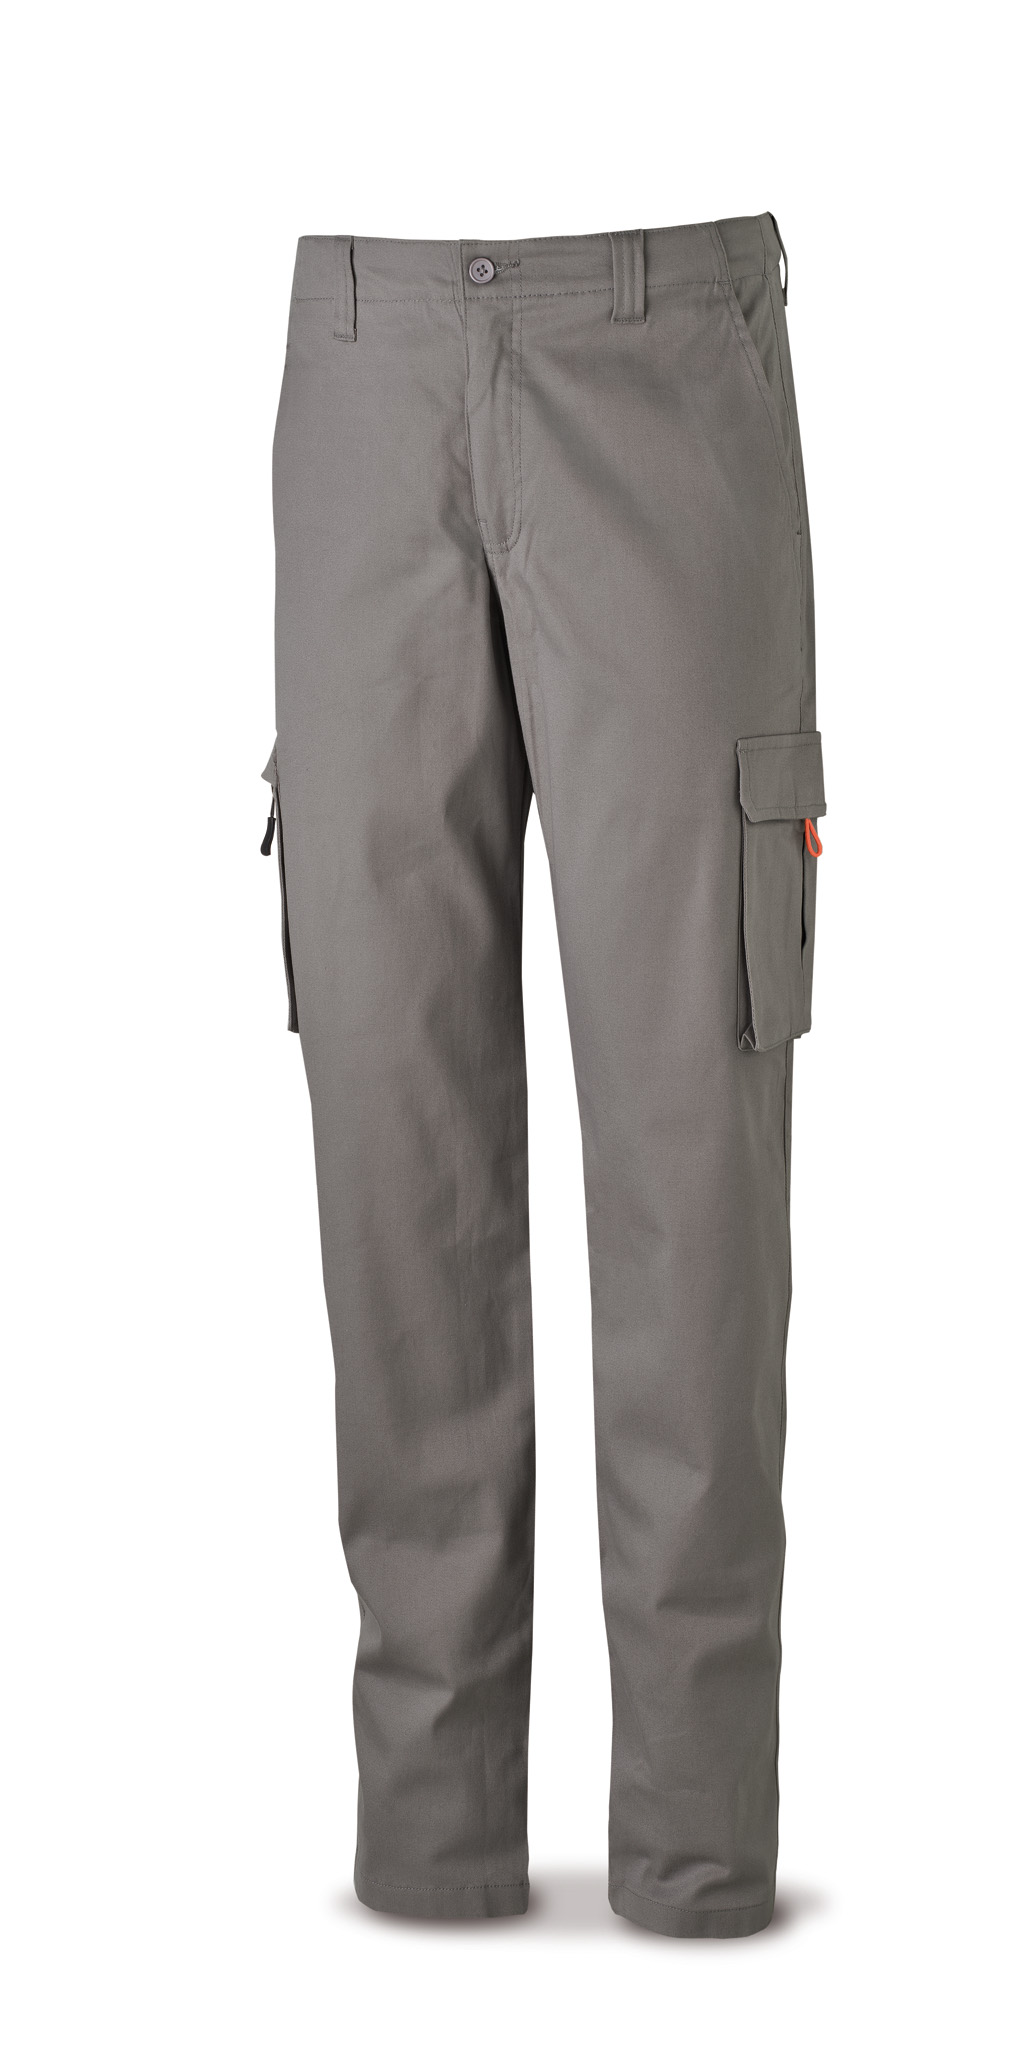 588-PELASRG Workwear Casual Series ELASTIC cotton and Elastane pants.Grey.